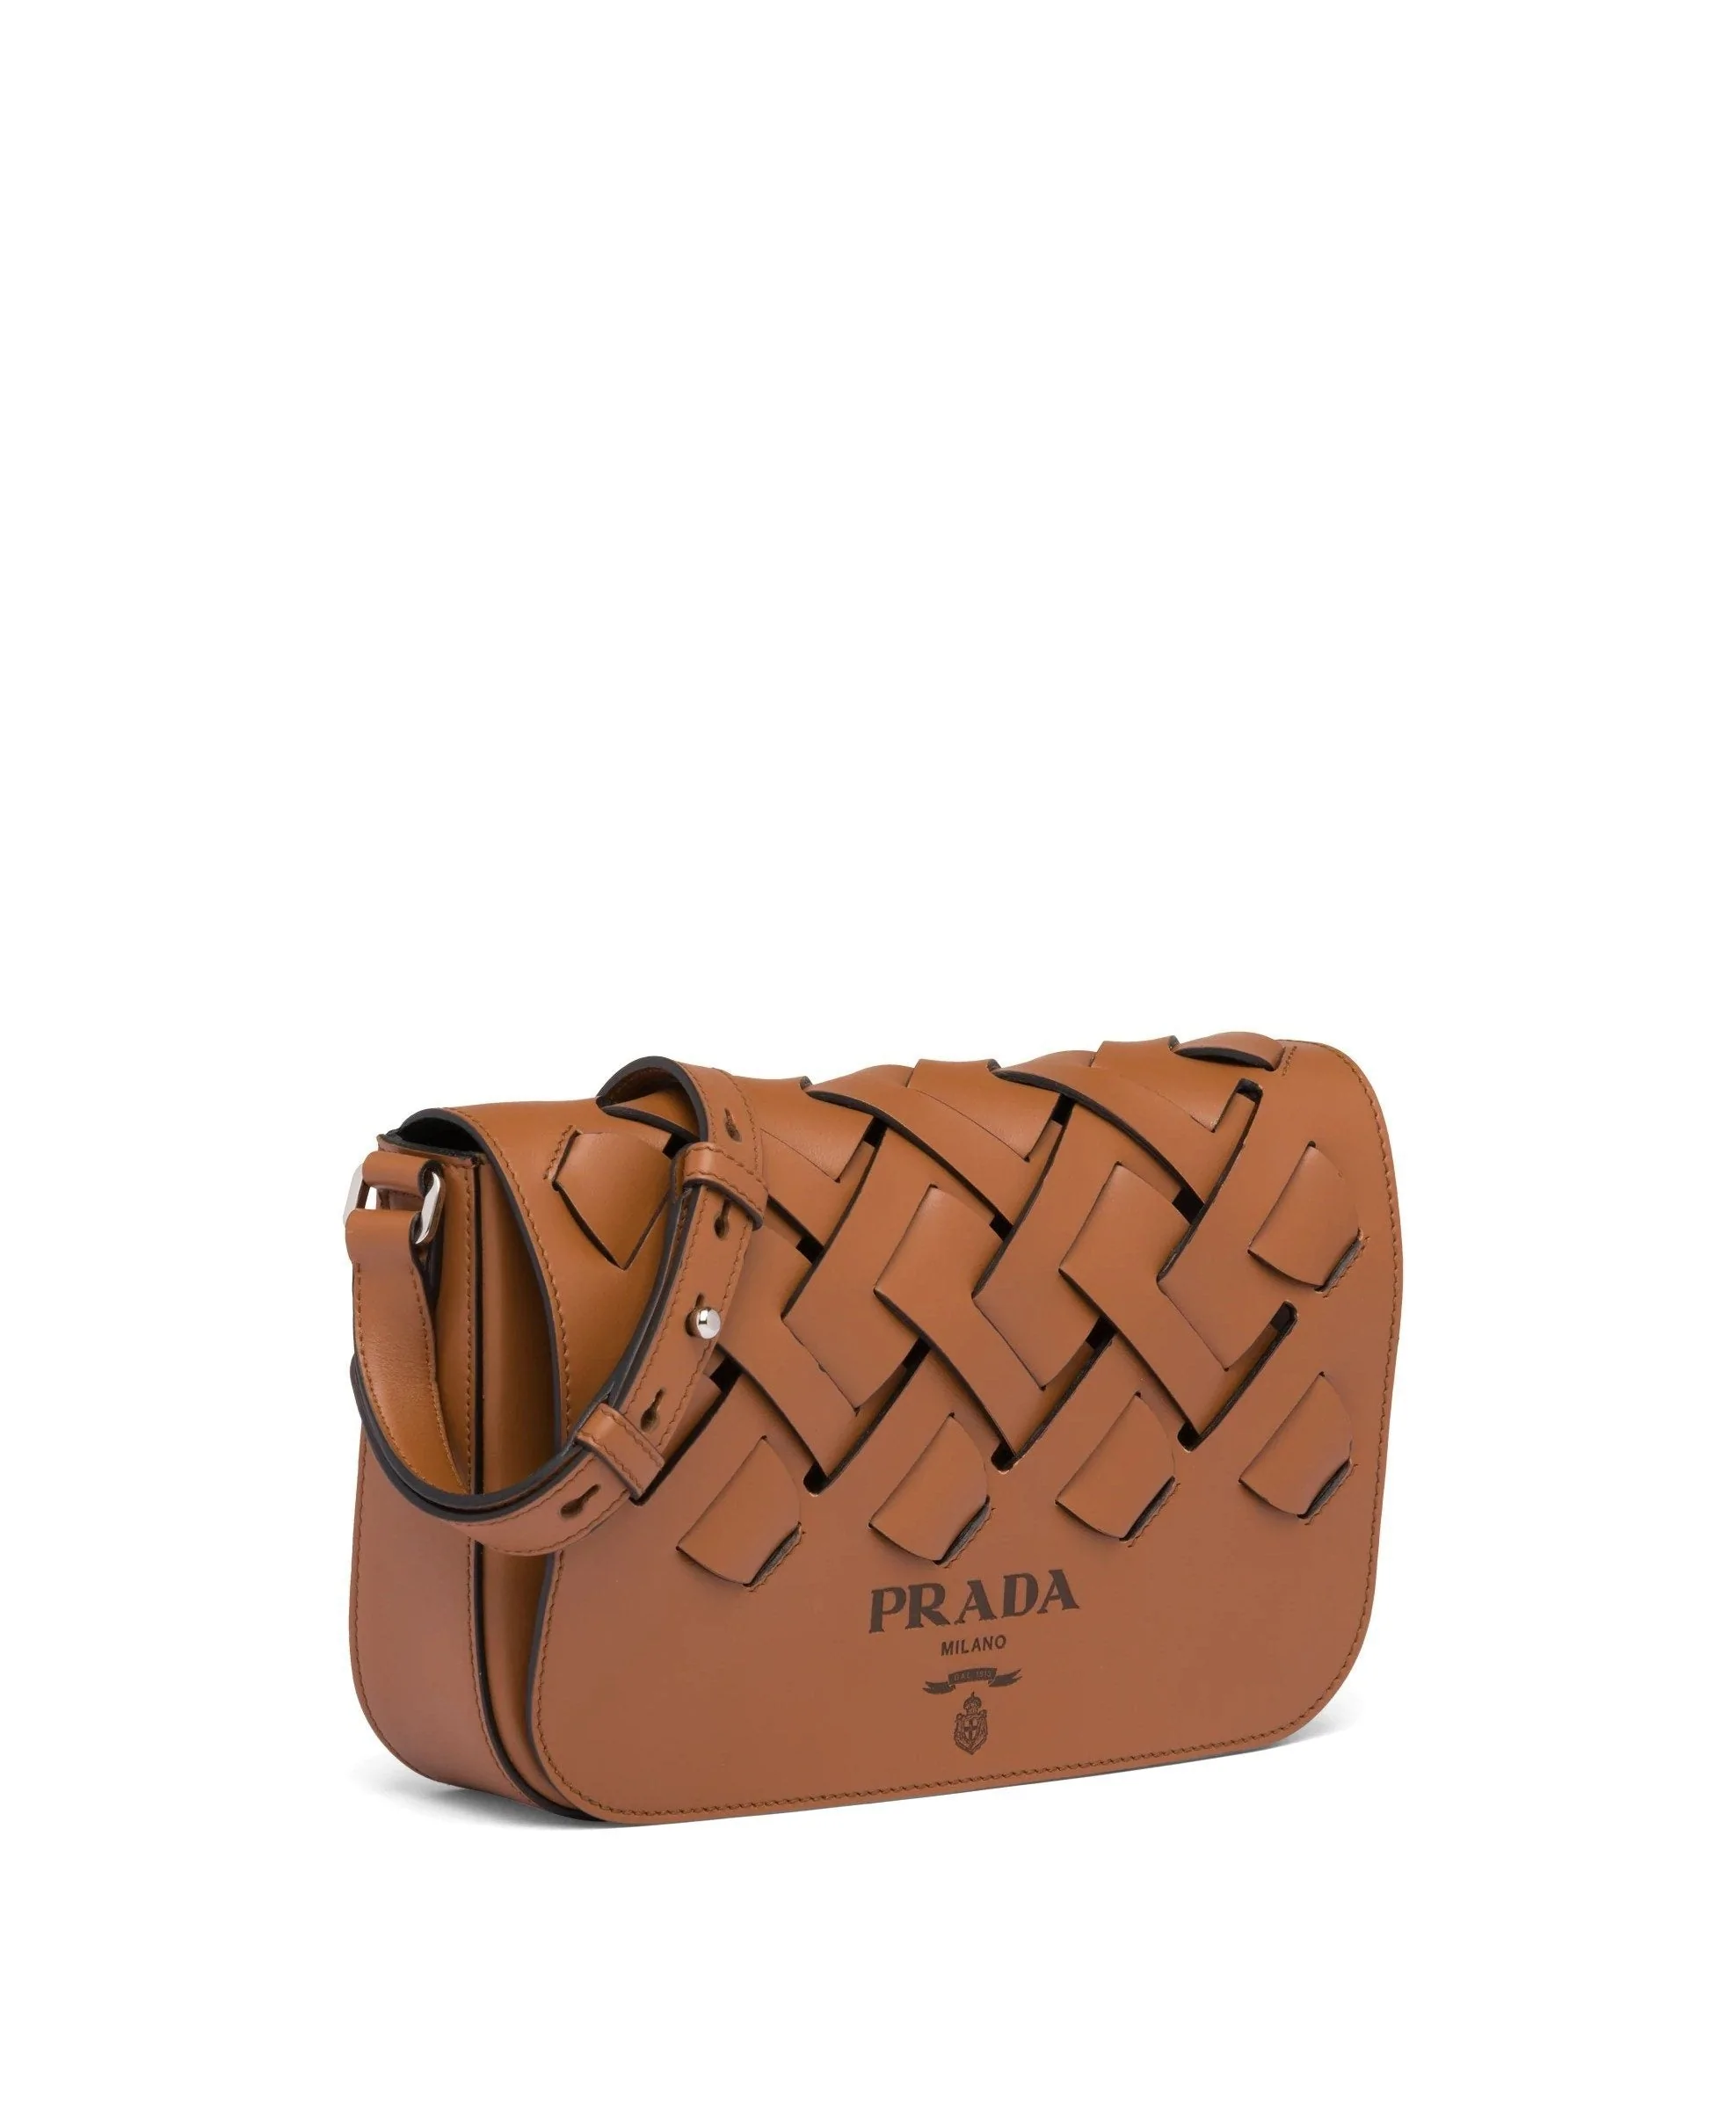 Prada Leather Shoulder Bag With Large Woven Motif